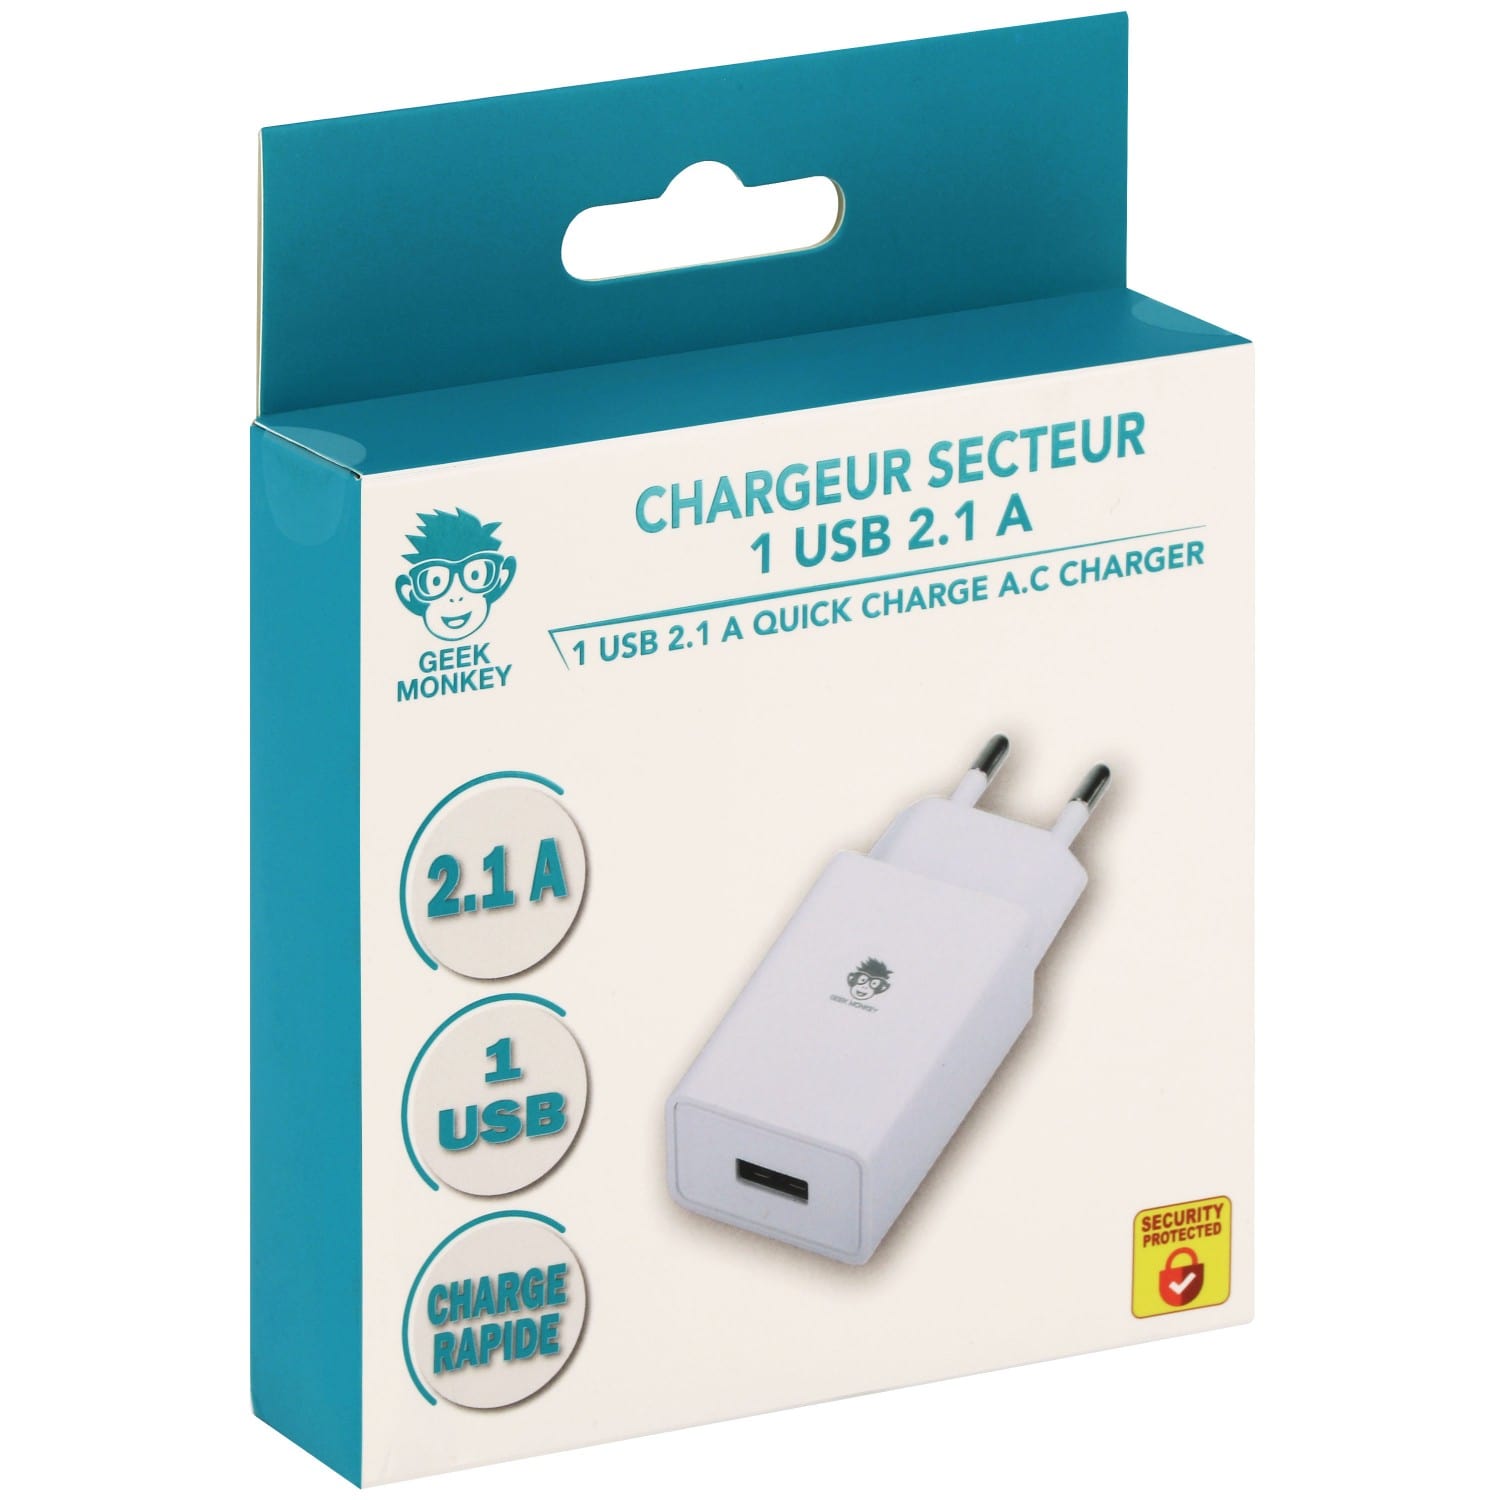 Chargeur GEEK MONKEY secteur USB-A 2.1 - Charge rapide - Blanc